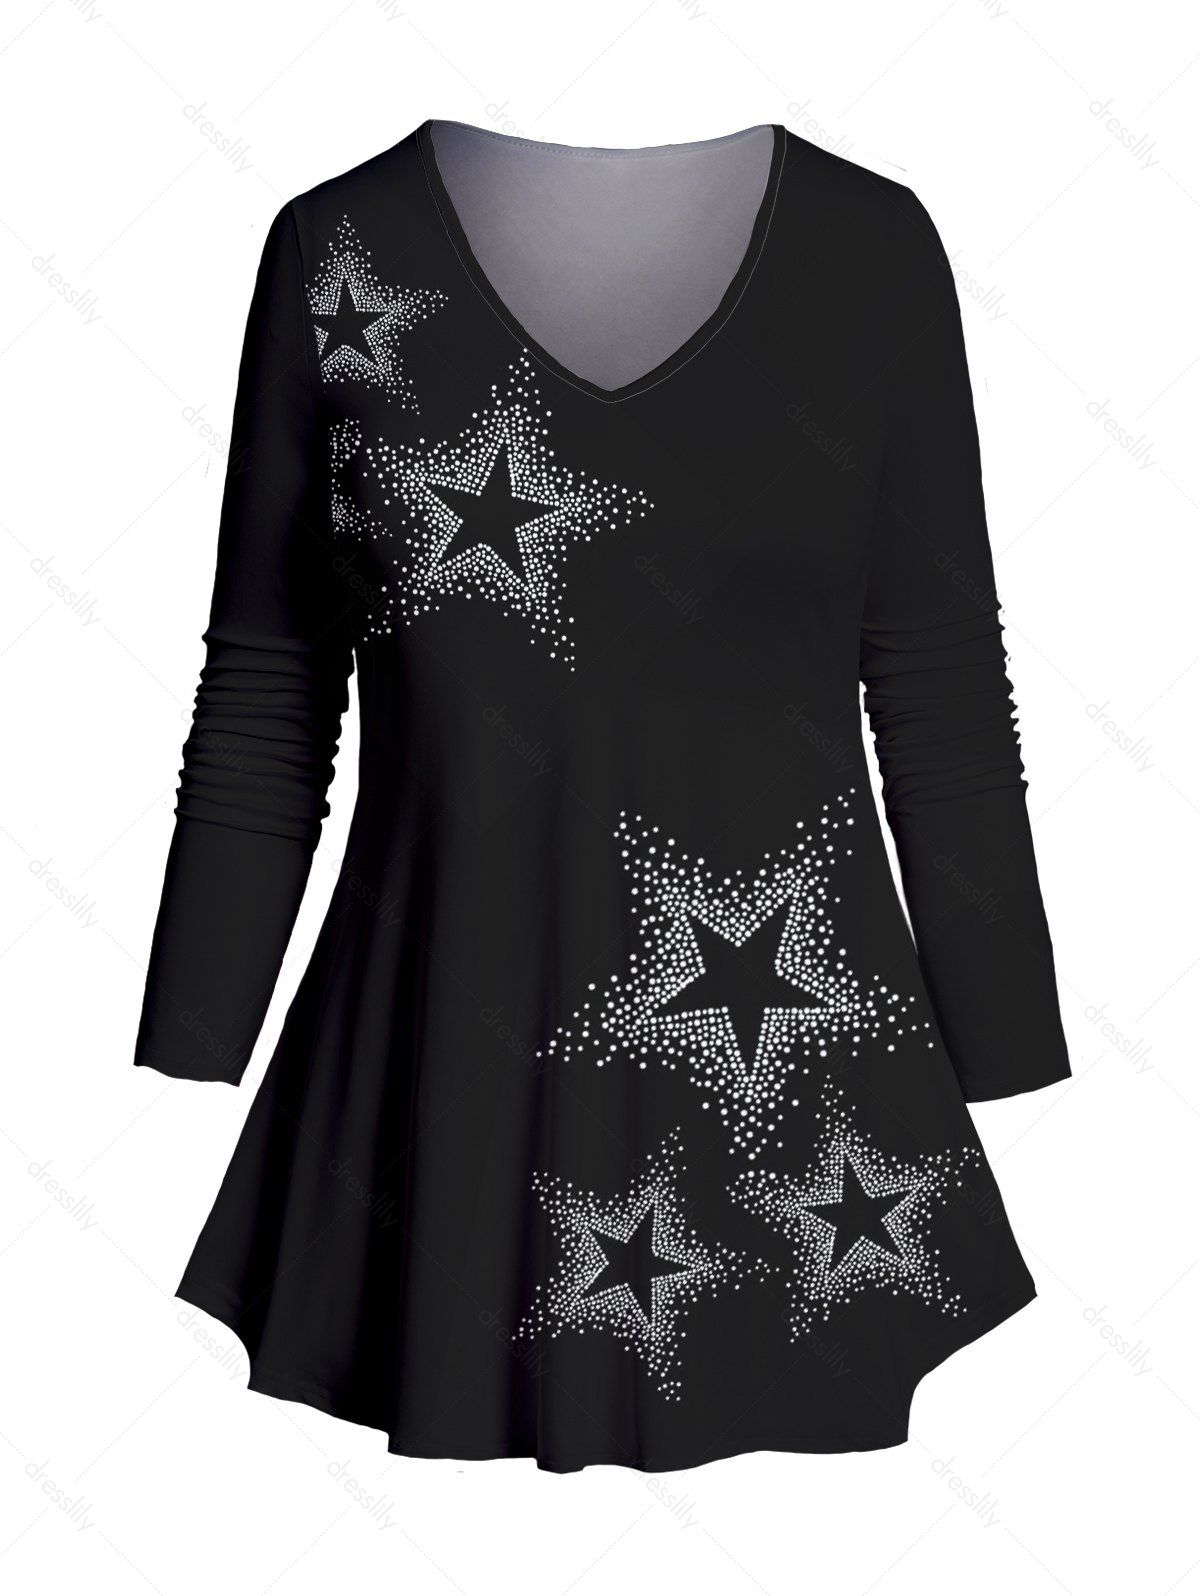 Dresslily Fashion Women Plus Size & Curve Full Sleeve T-shirt Sparkle Star Print V Neck Long Tee Clothing 4x / us 22 Black